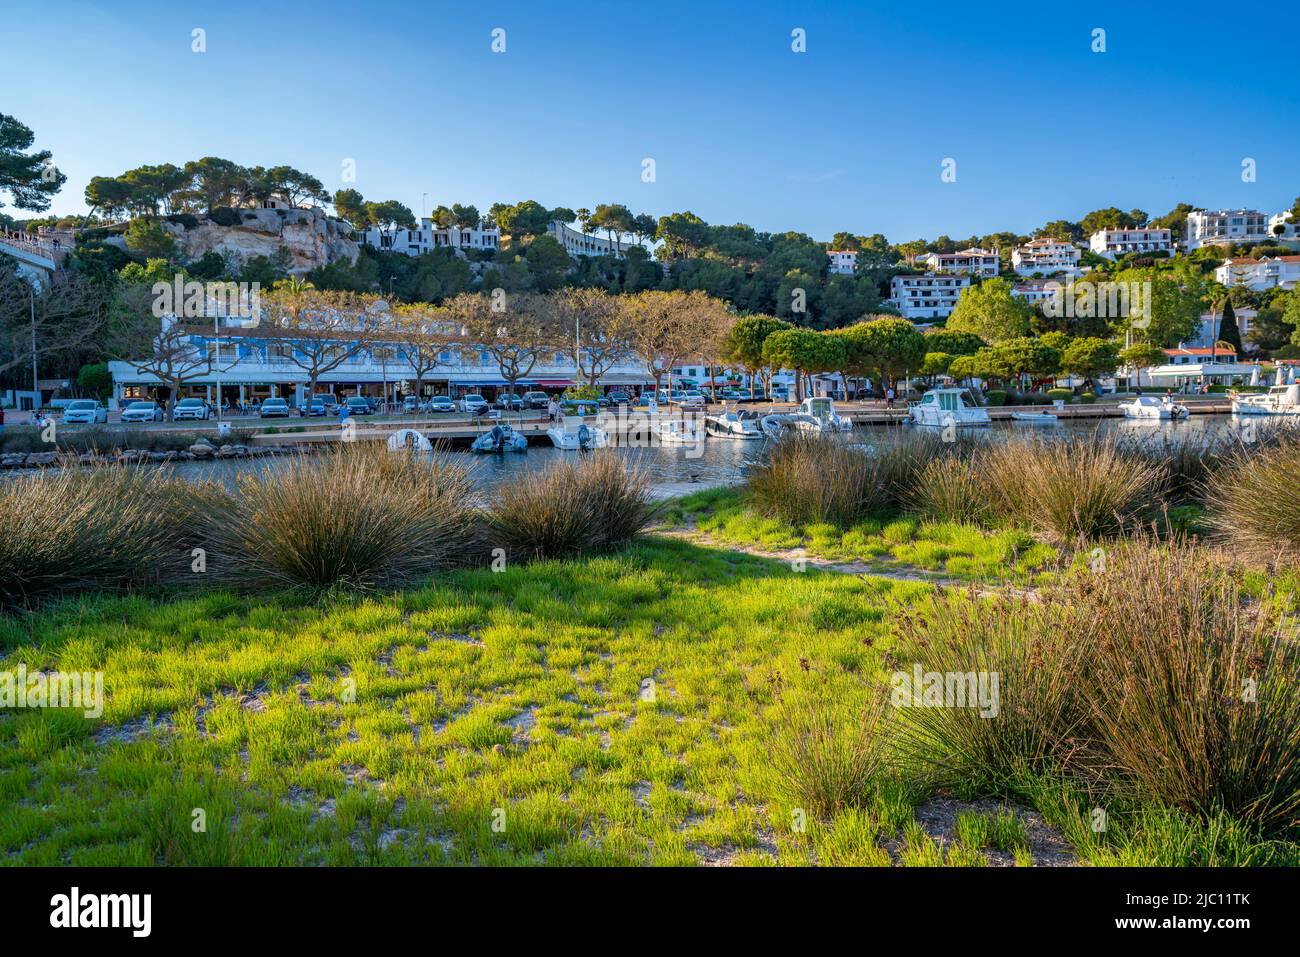 View of hotels overlooking boats at marina in Cala Galdana, Cala Galdana, Menorca, Balearic Islands, Spain, Europe Stock Photo